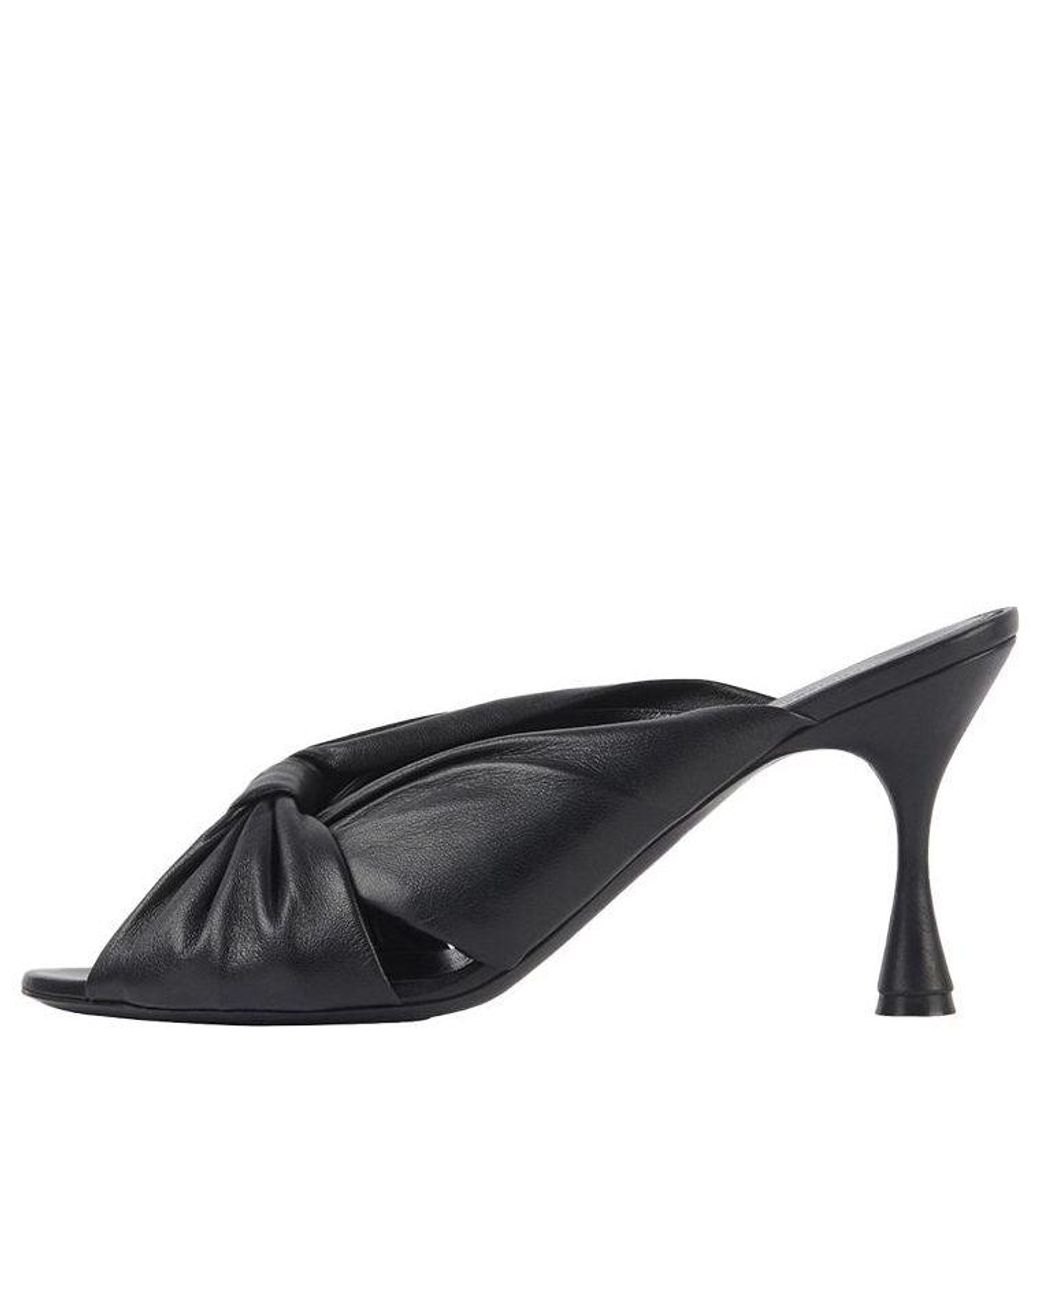 So Chic Pointed Toe Block Heels | Small heel shoes, Heels, Cute shoes heels